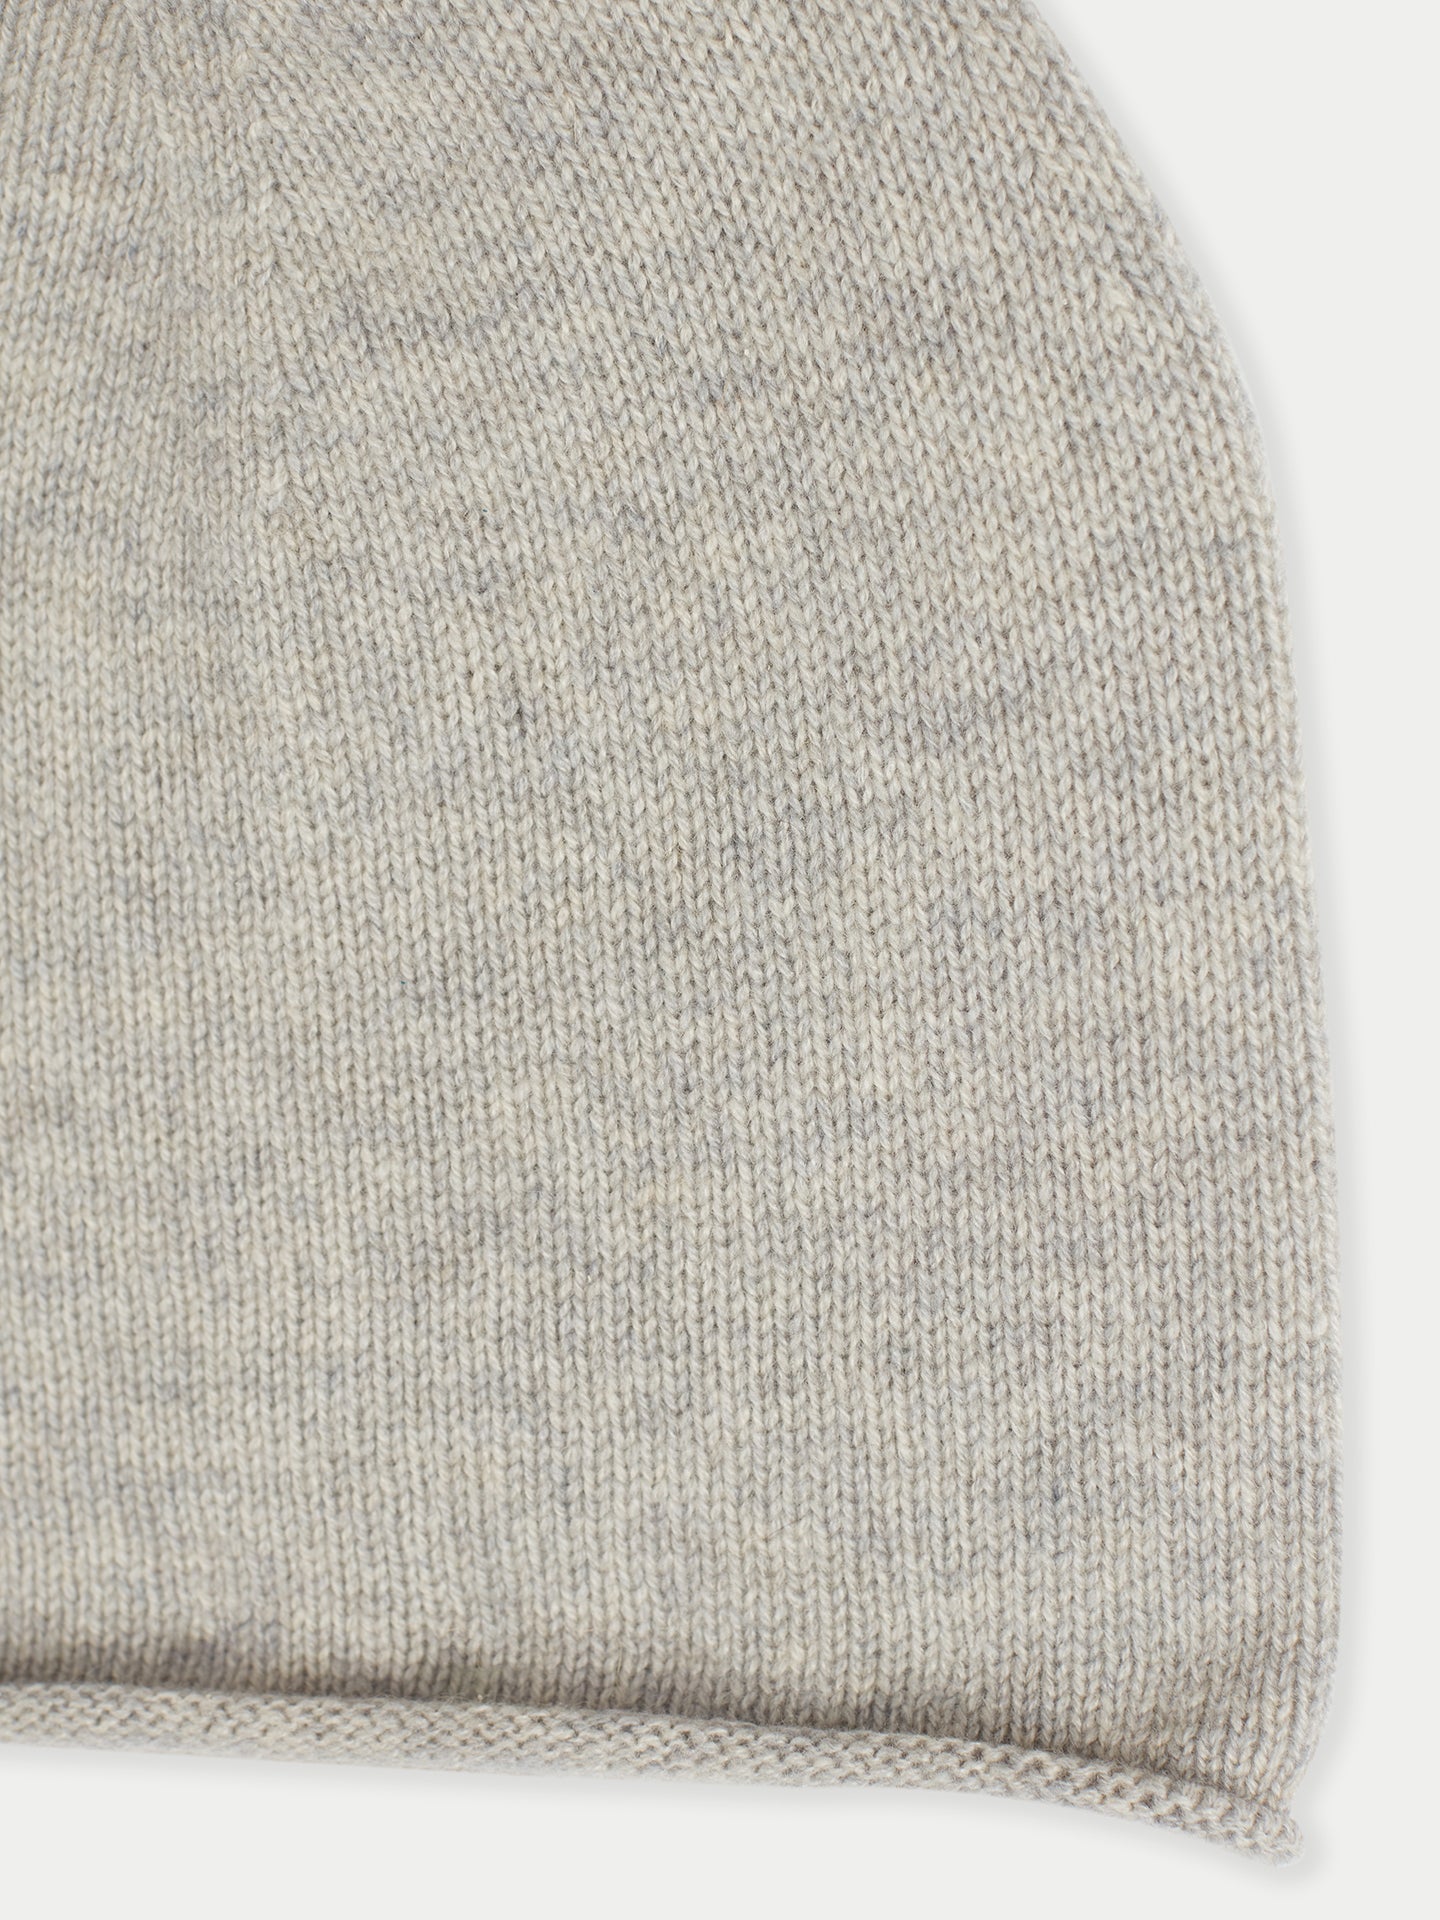 Women's Cashmere $99 Hat & Sweater Set Grey - Gobi Cashmere